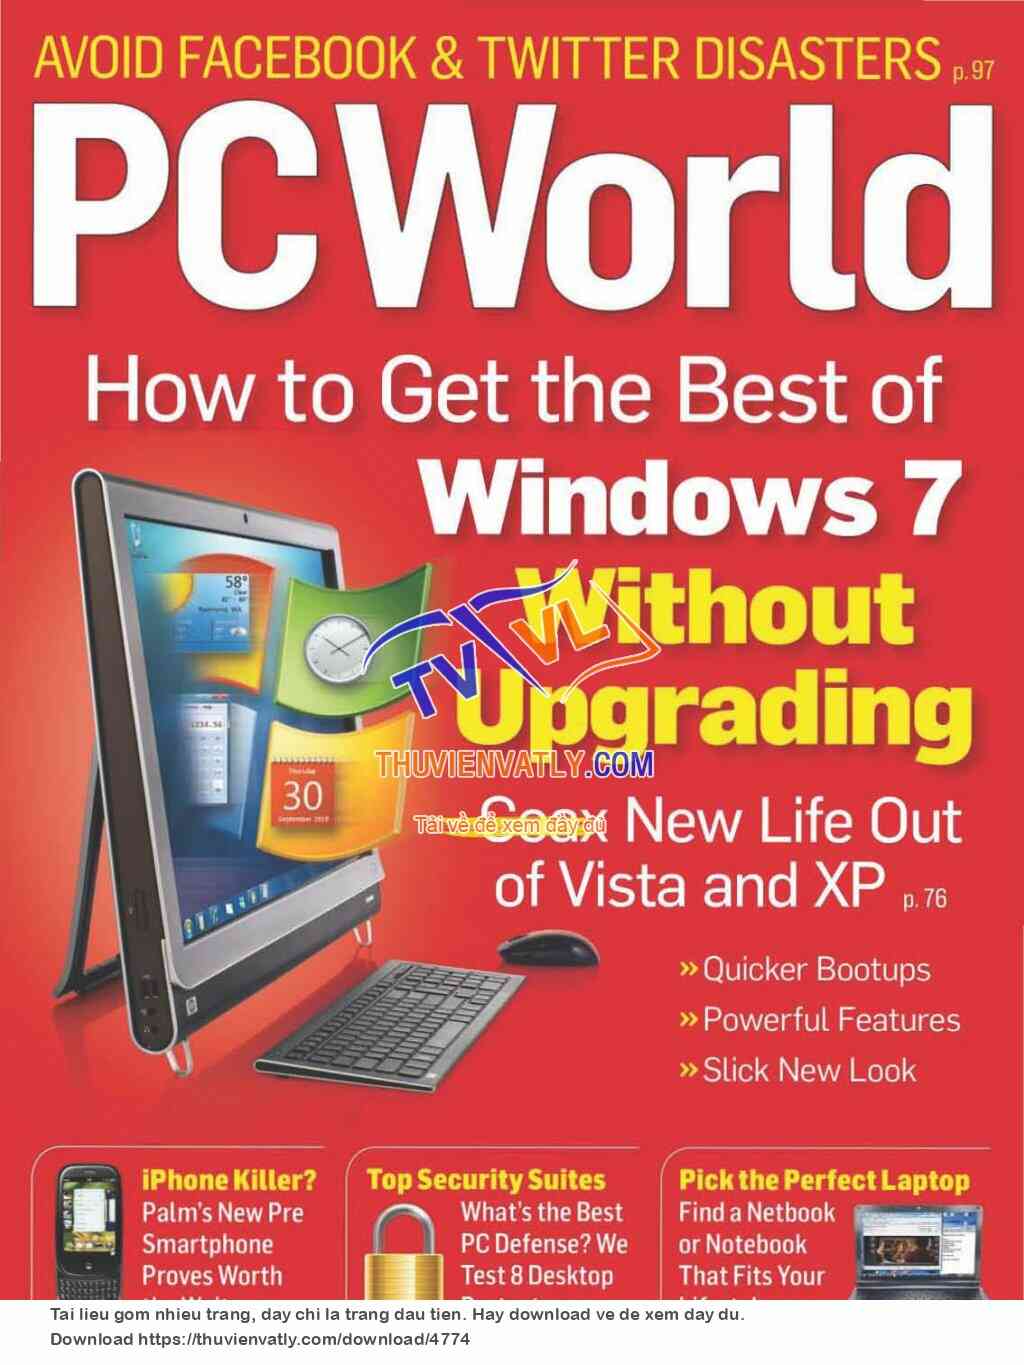 PC World Magazine [ENG] August 2009